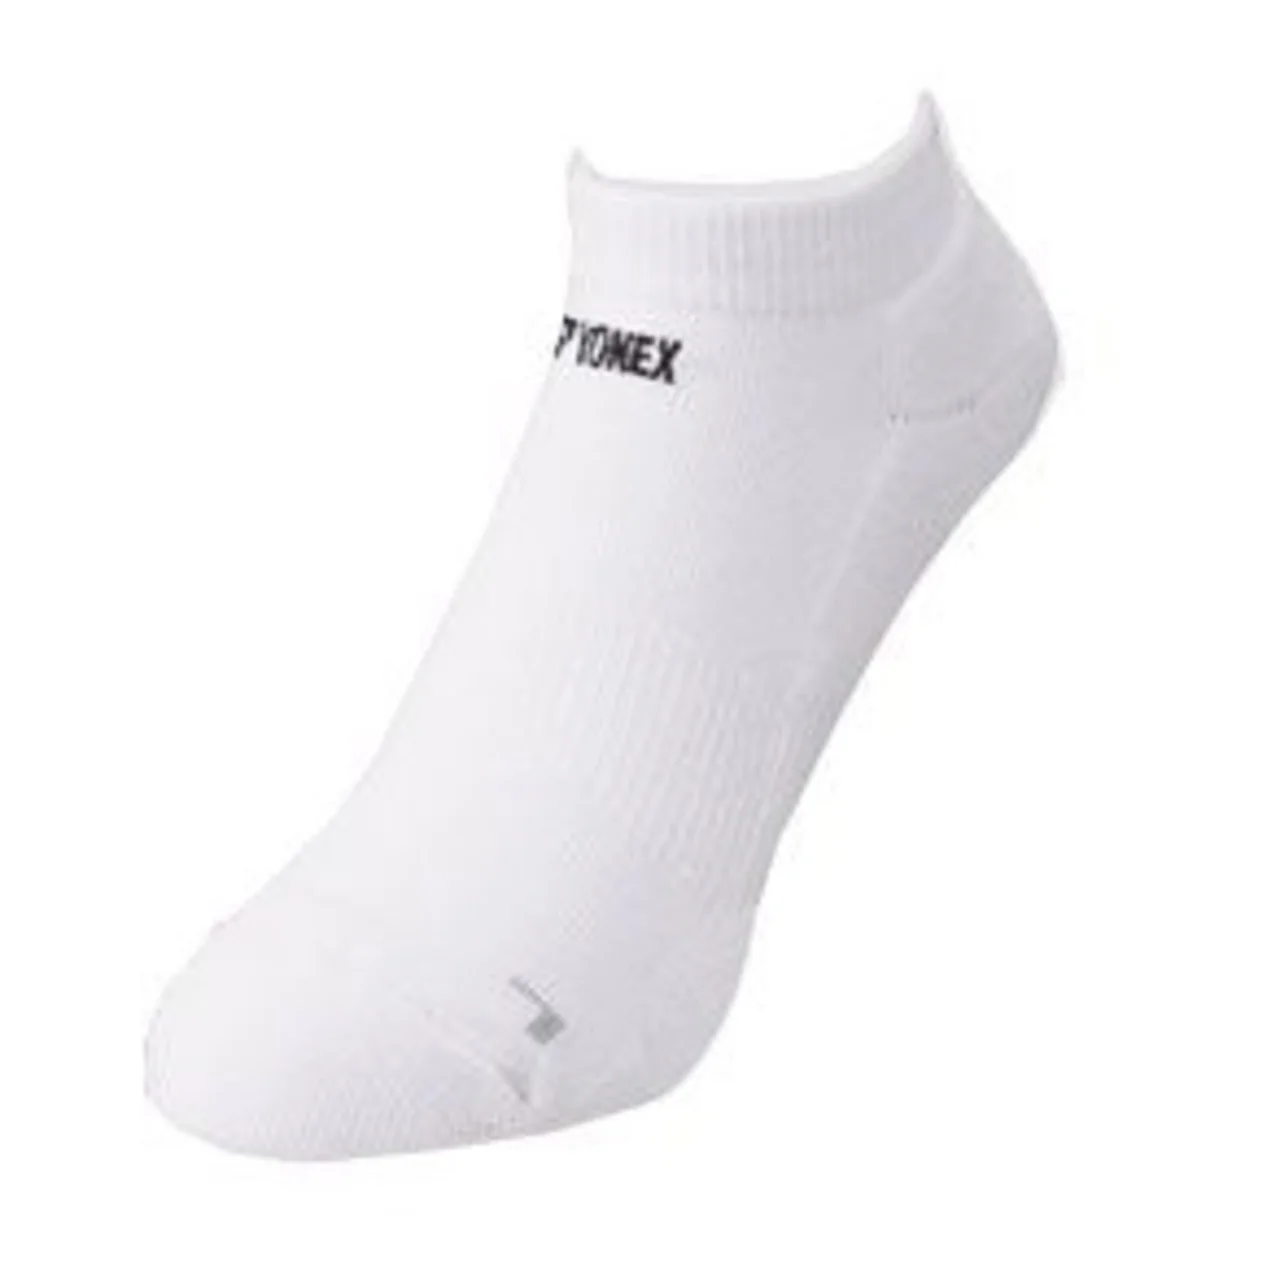 Yonex Low Cut Sock